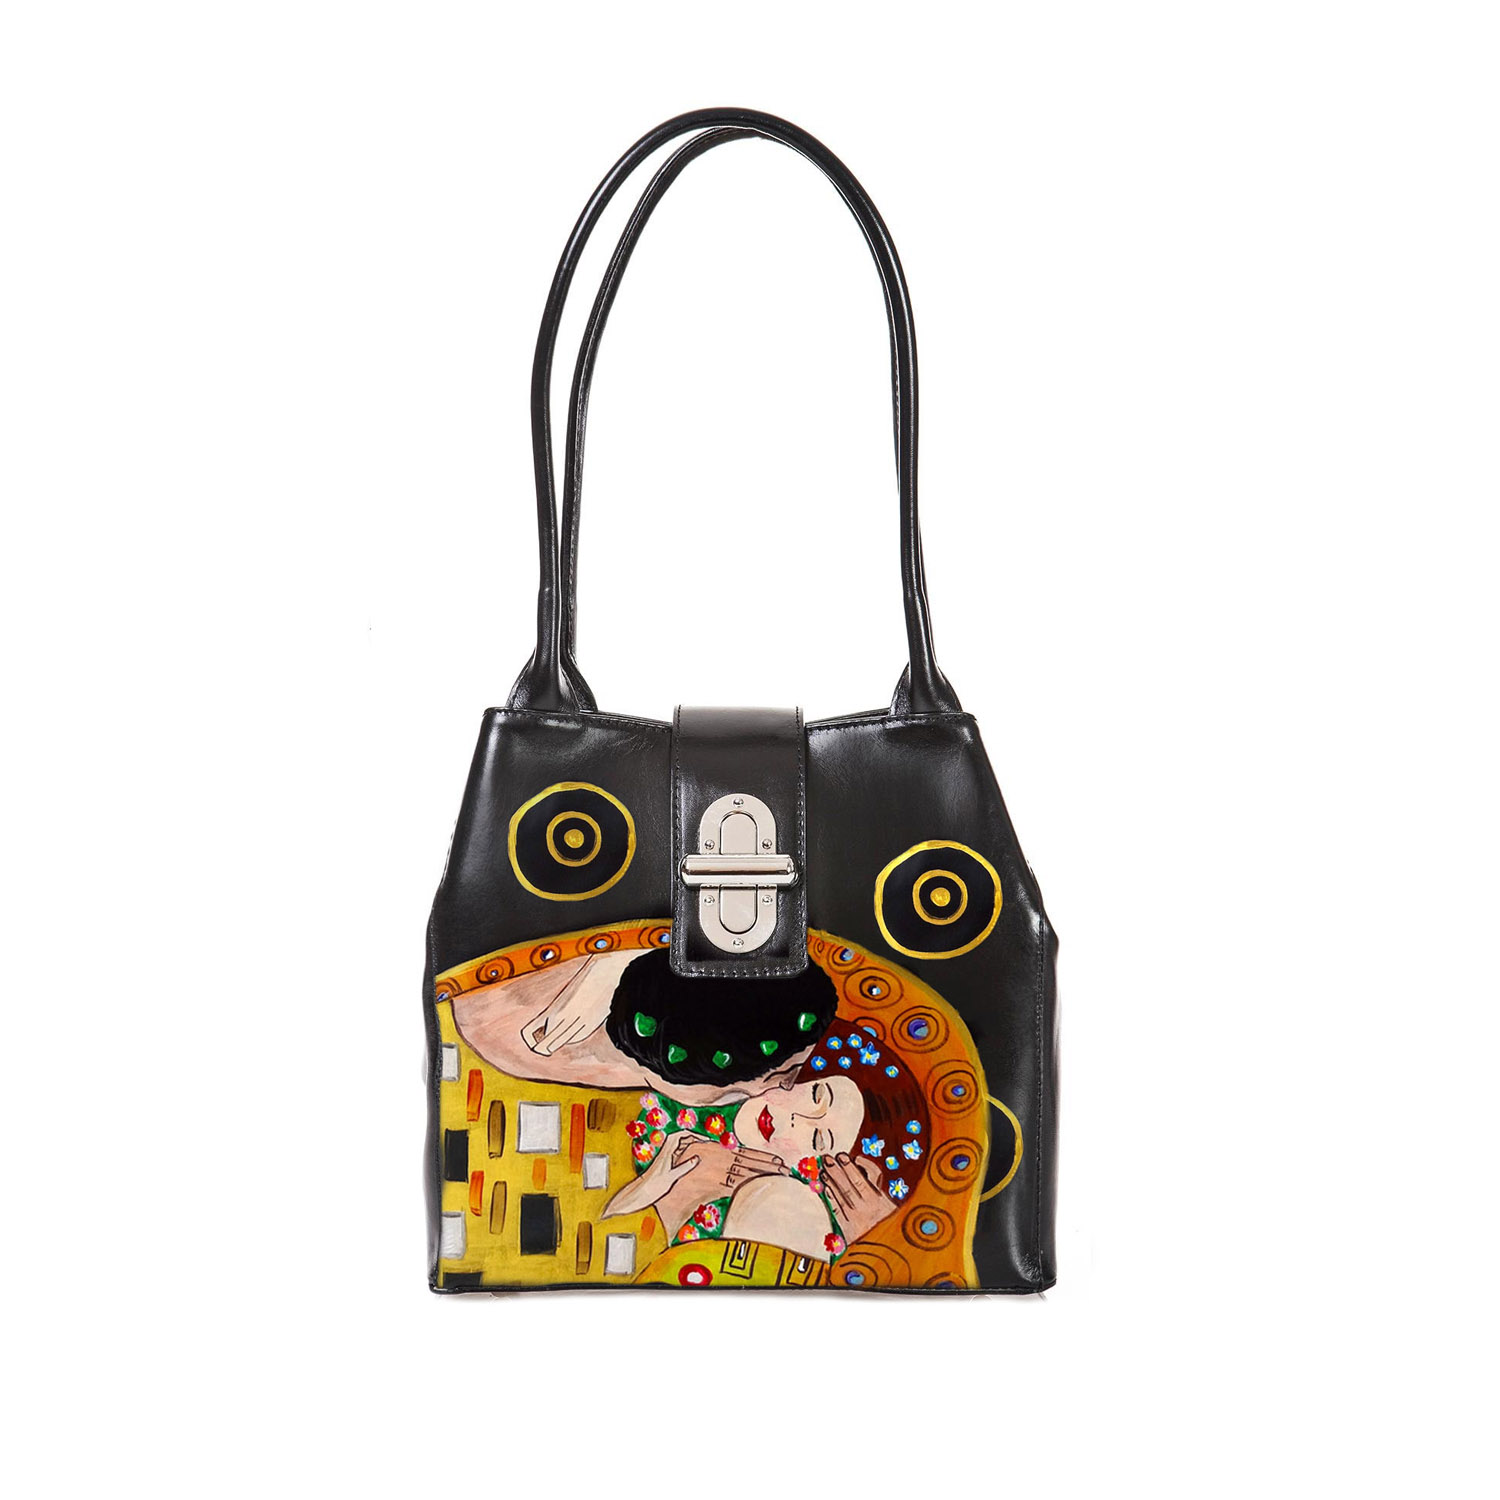 Handpainted bag - The Kiss by Klimt